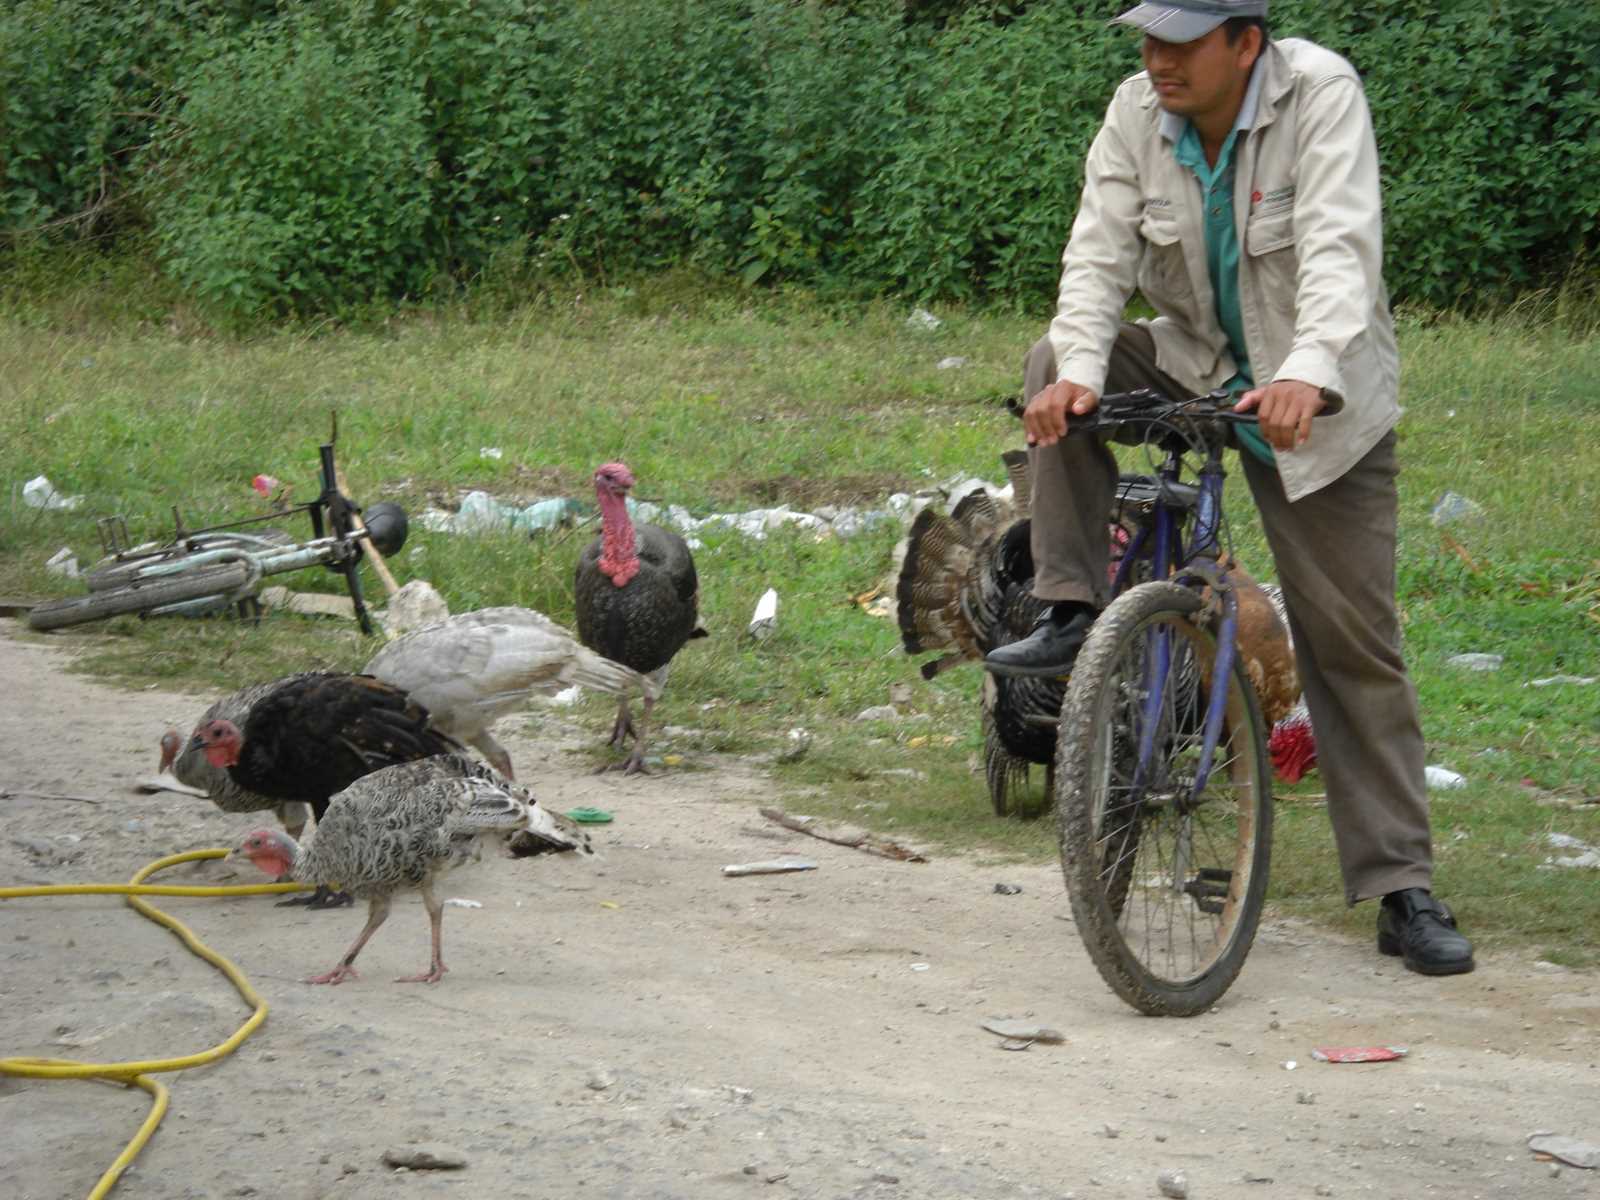 CIMG10
78 turkeys and bike
